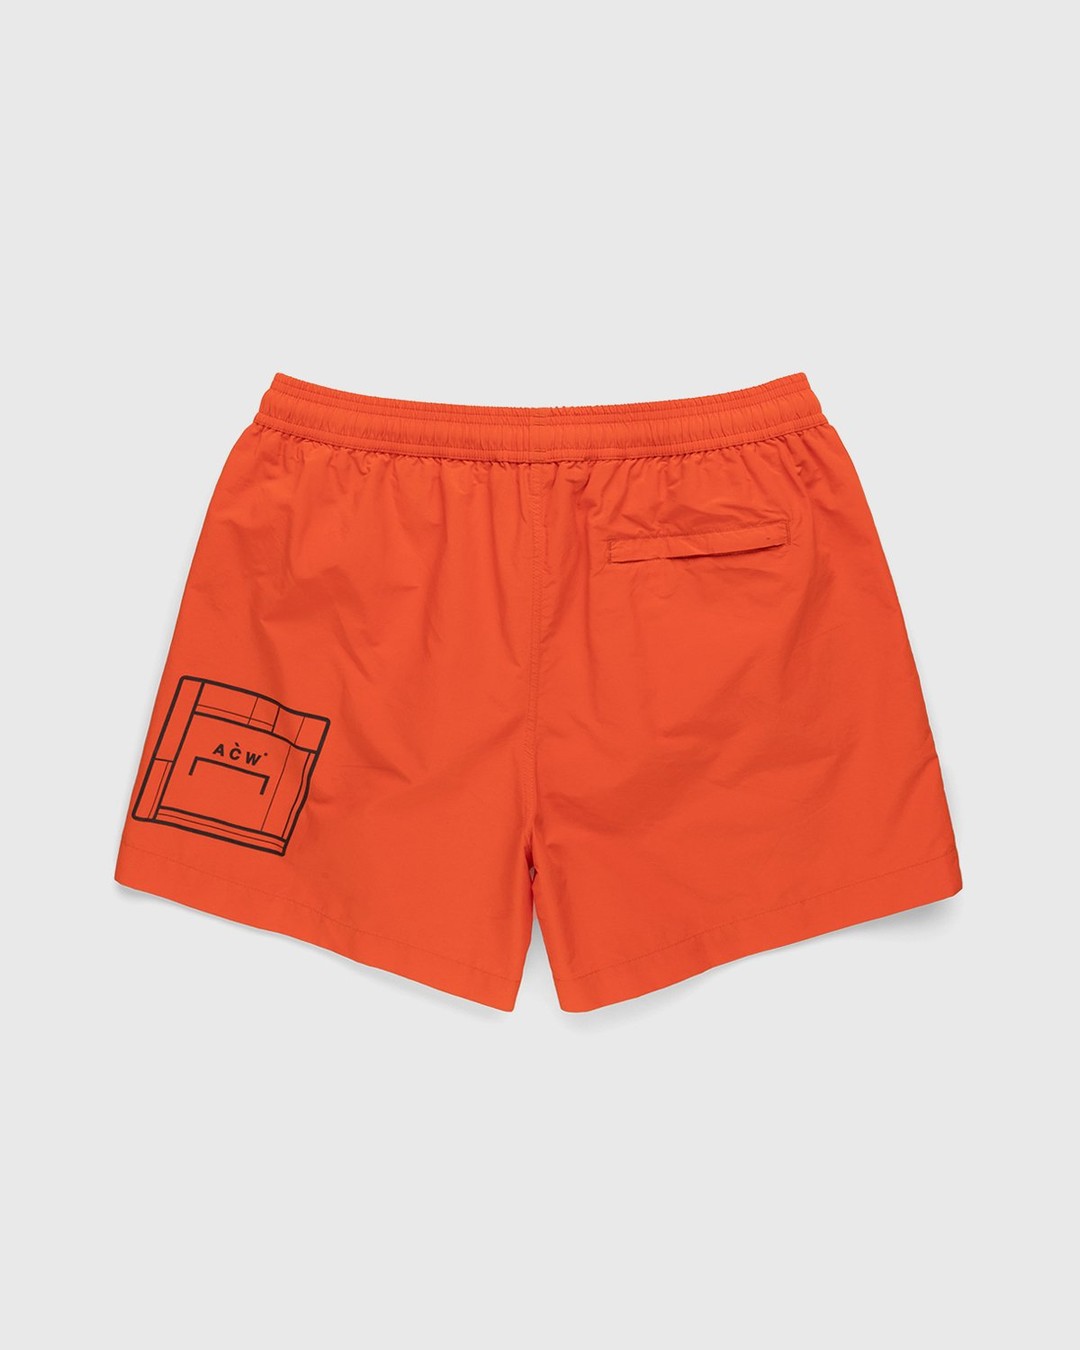 A-Cold-Wall* – Natant Nylon Short Rich Orange - Active Shorts - Orange - Image 2